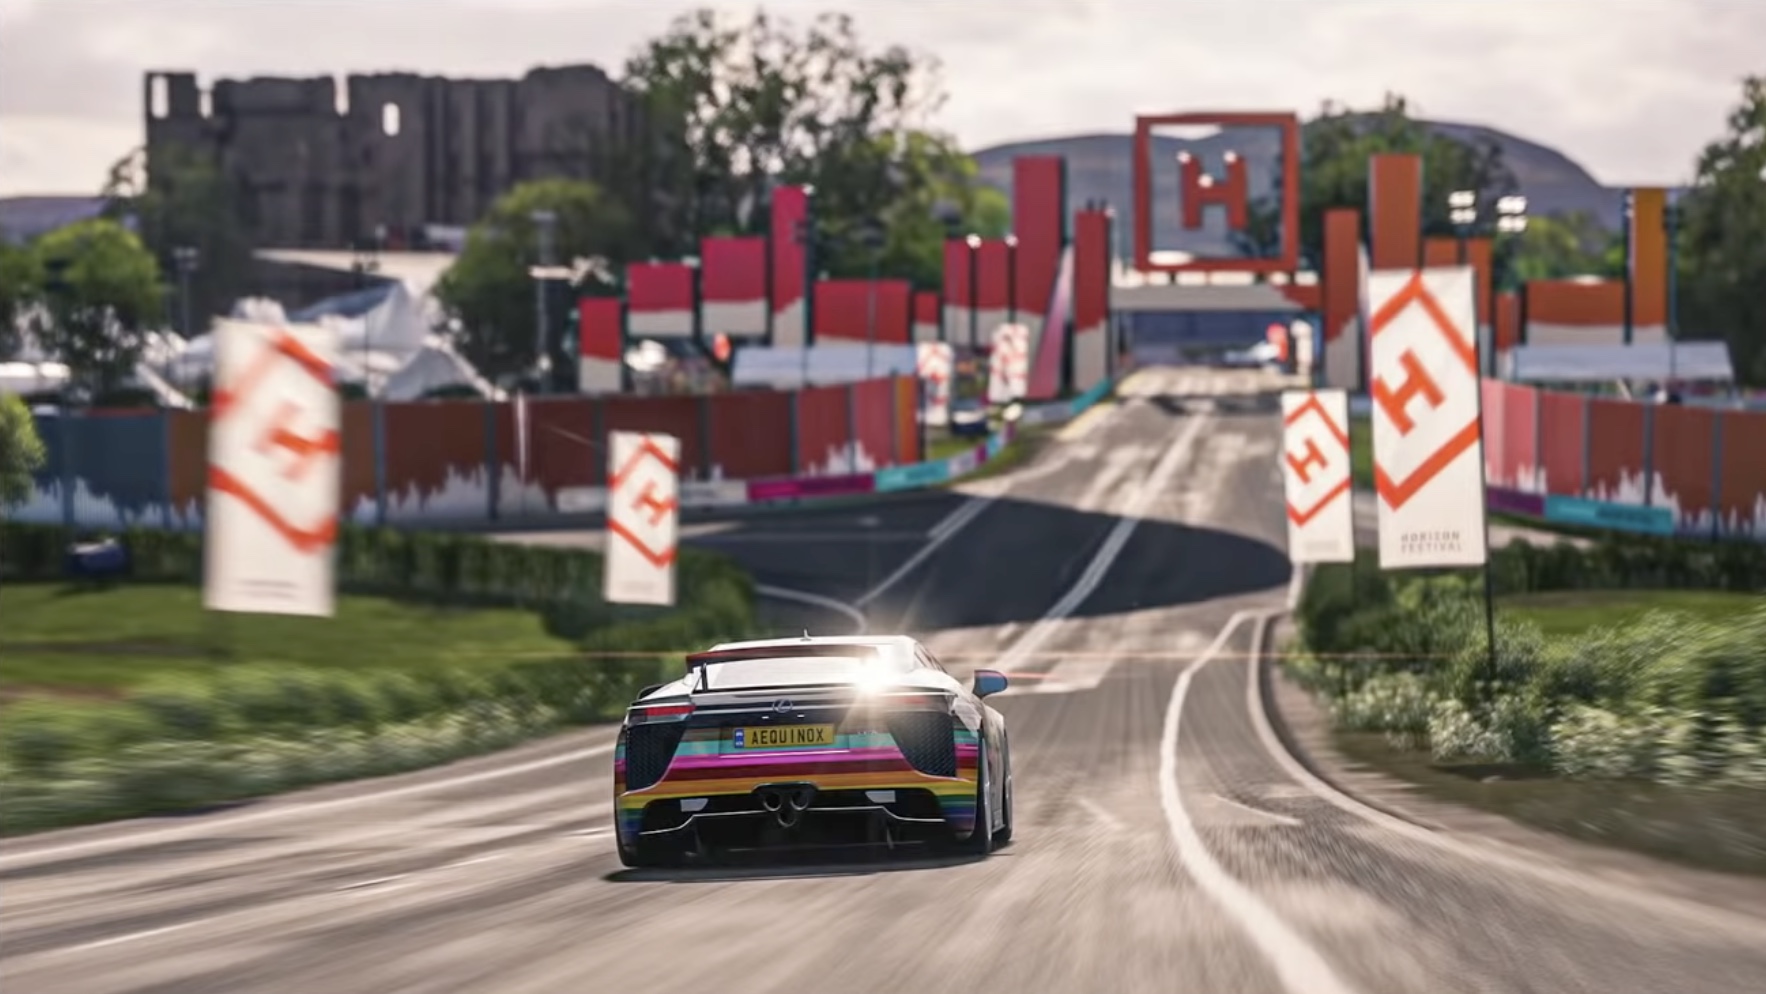 Forza Horizon 5 impresses at Gamescom 2021 gameplay preview - CNET